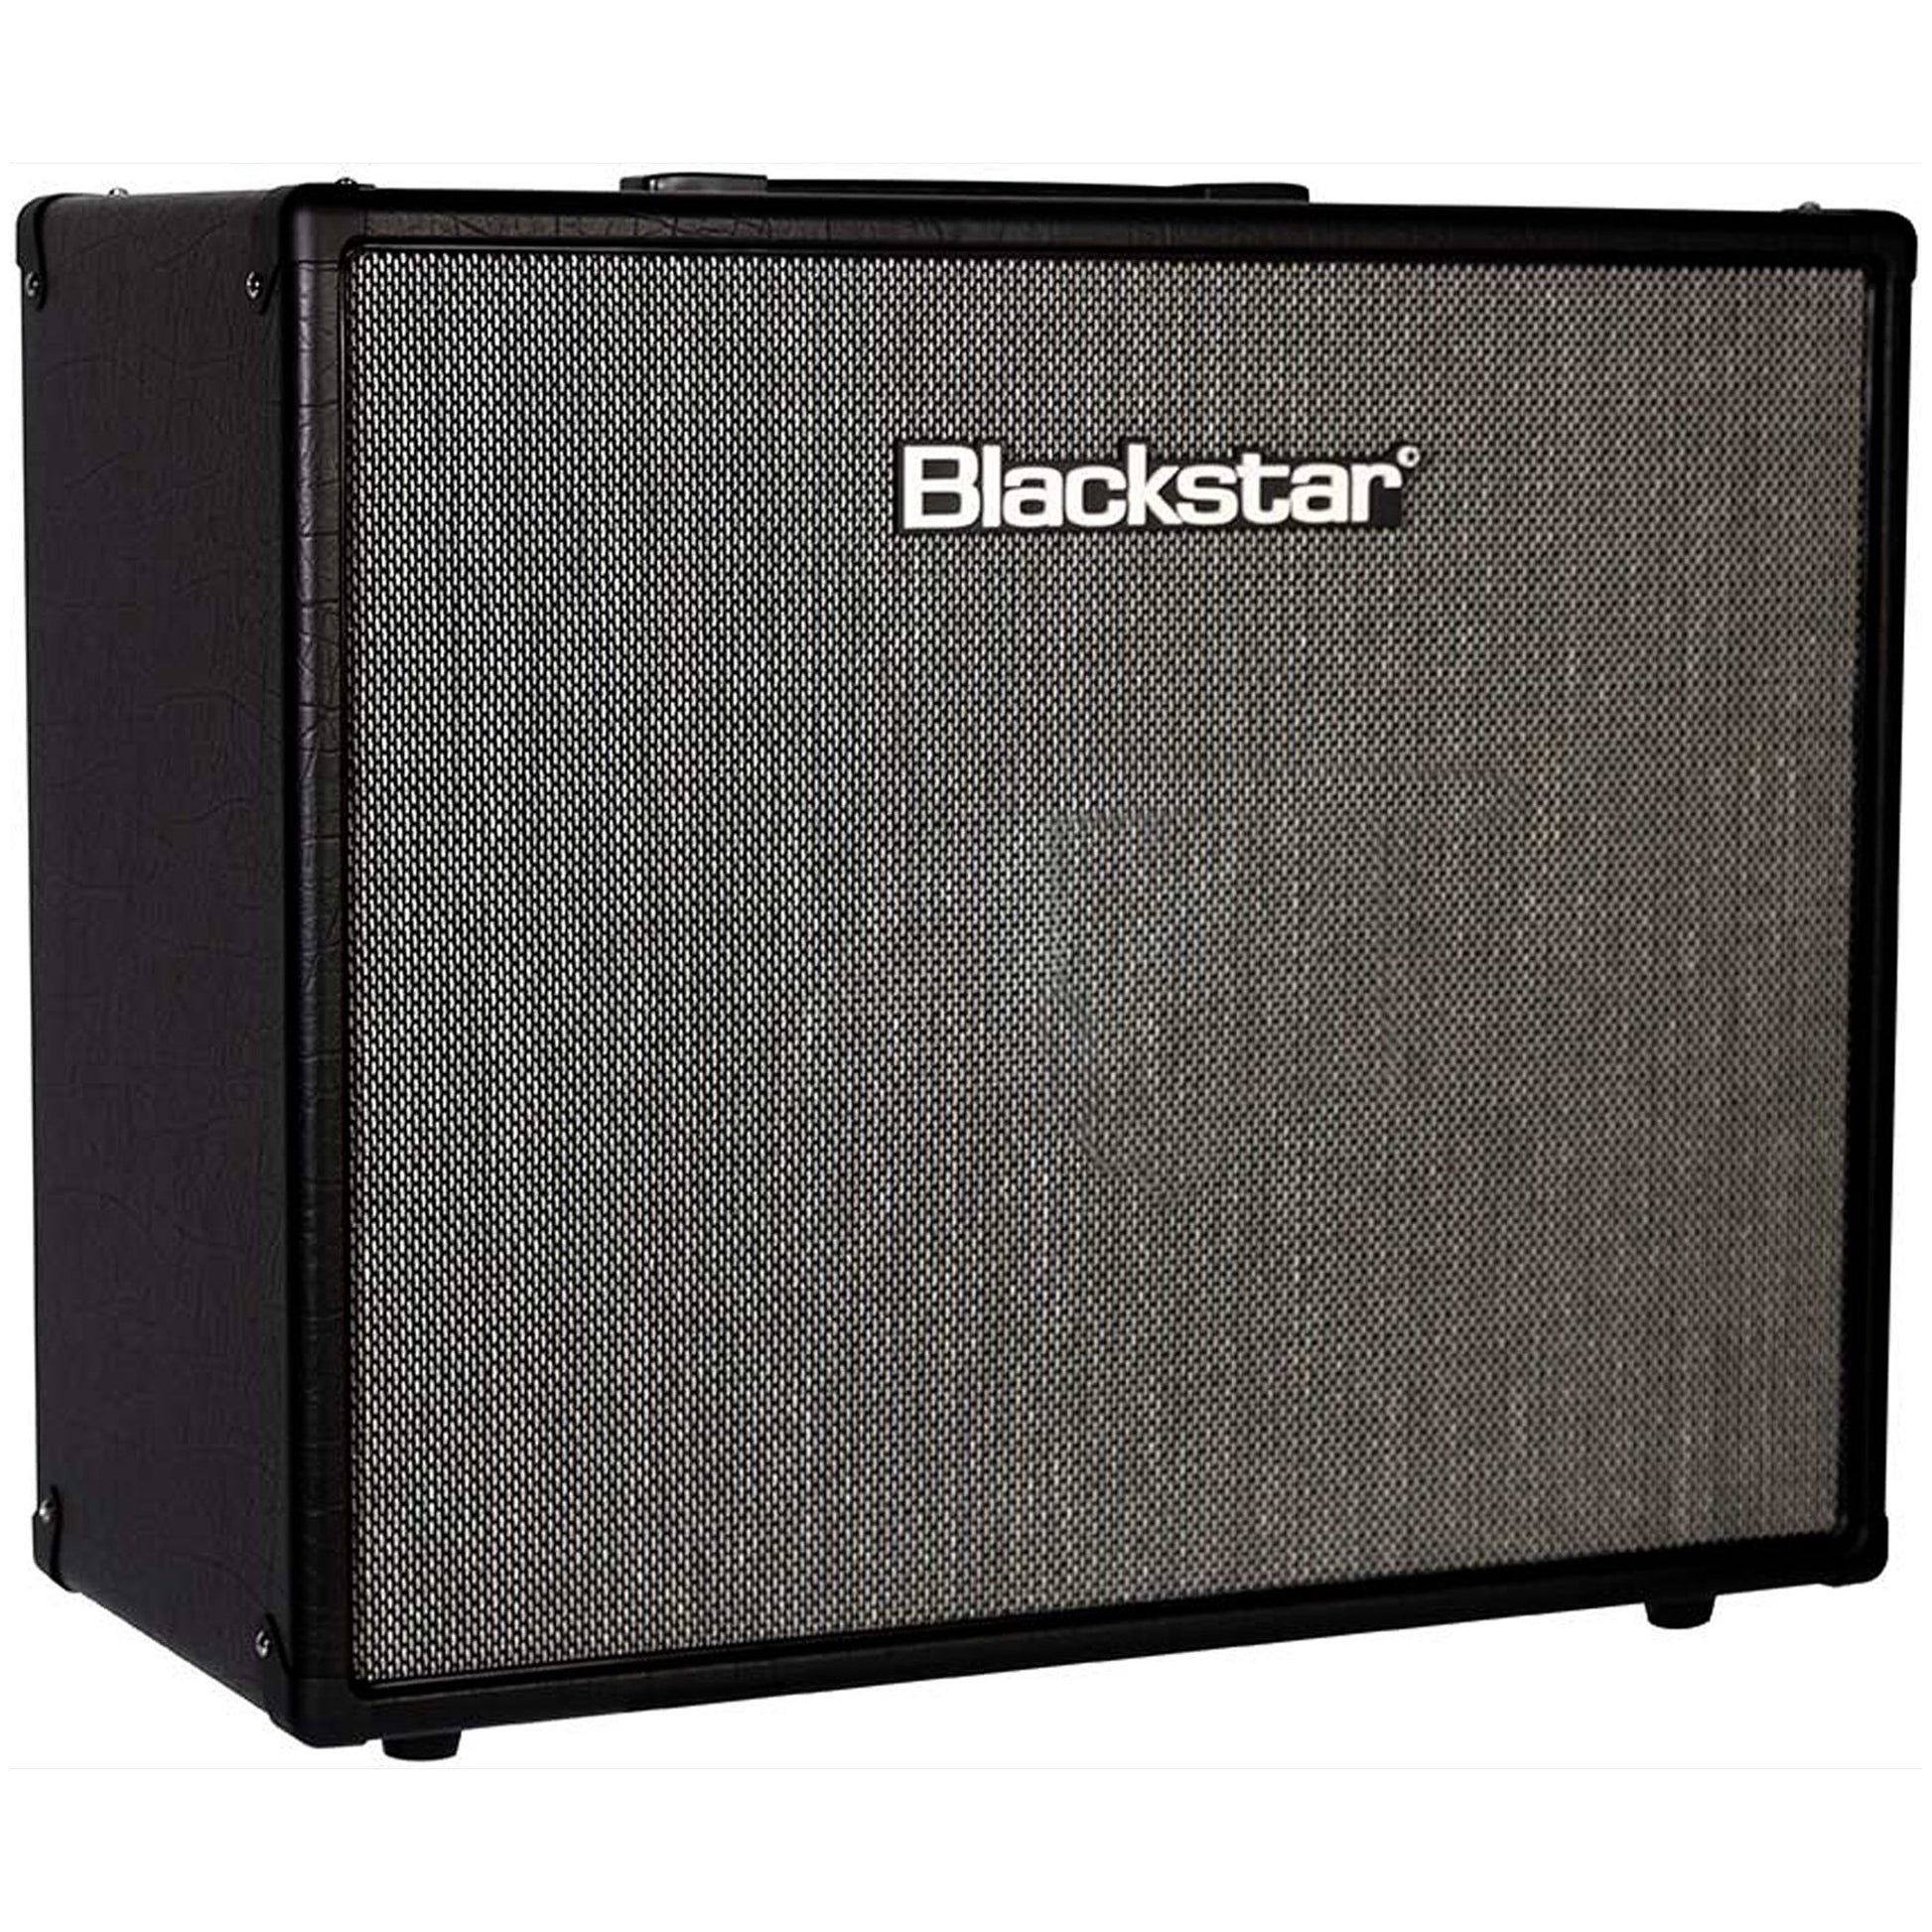 Blackstar HTV-112 Mark II Speaker Cabinet (1x12 Inch, 80 Watts)